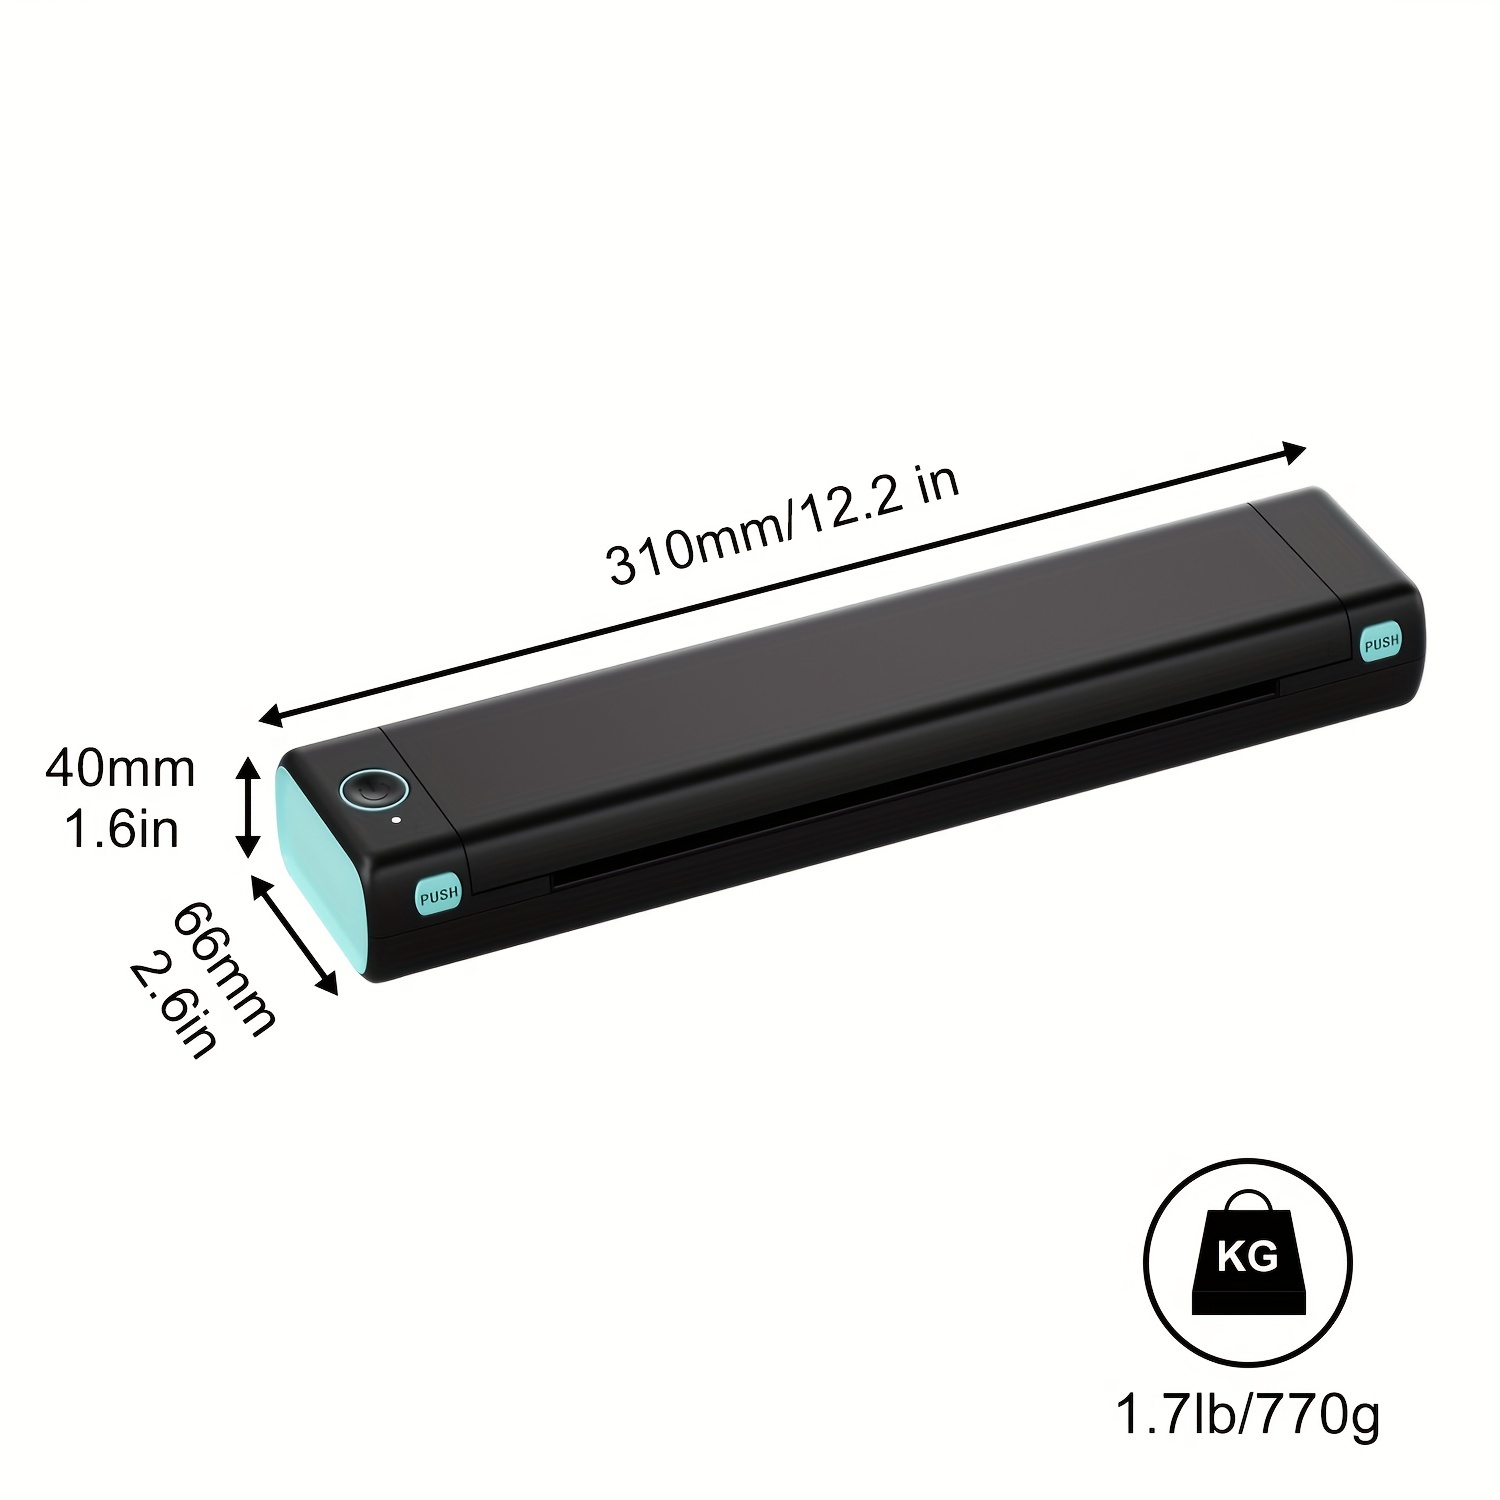 Itari Impresora térmica, impresora portátil inalámbrica para viajes,  impresora Bluetooth M832 compatible con papel de 2, 3, 4 pulgadas, A4/8.5 x  11